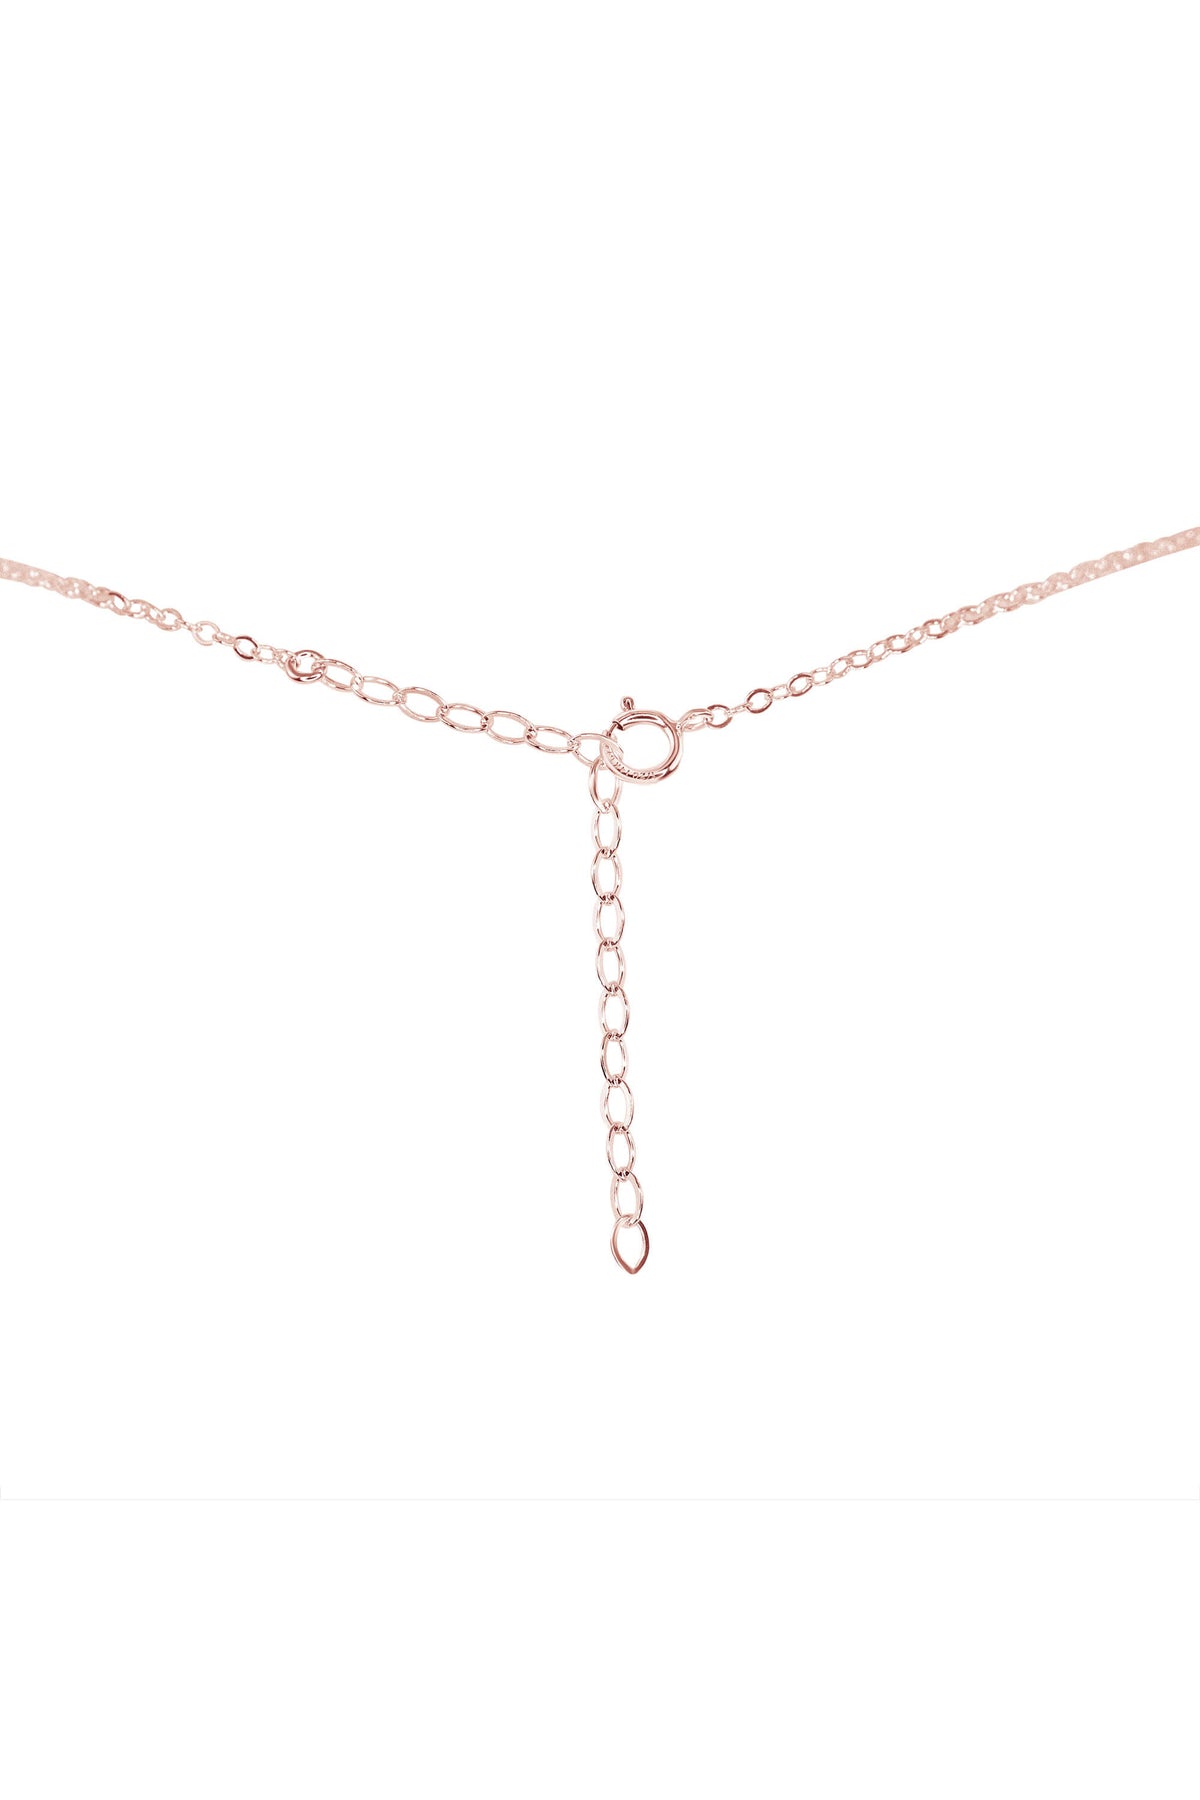 Raw Nugget Choker - Sunstone - 14K Rose Gold Fill - Luna Tide Handmade Jewellery